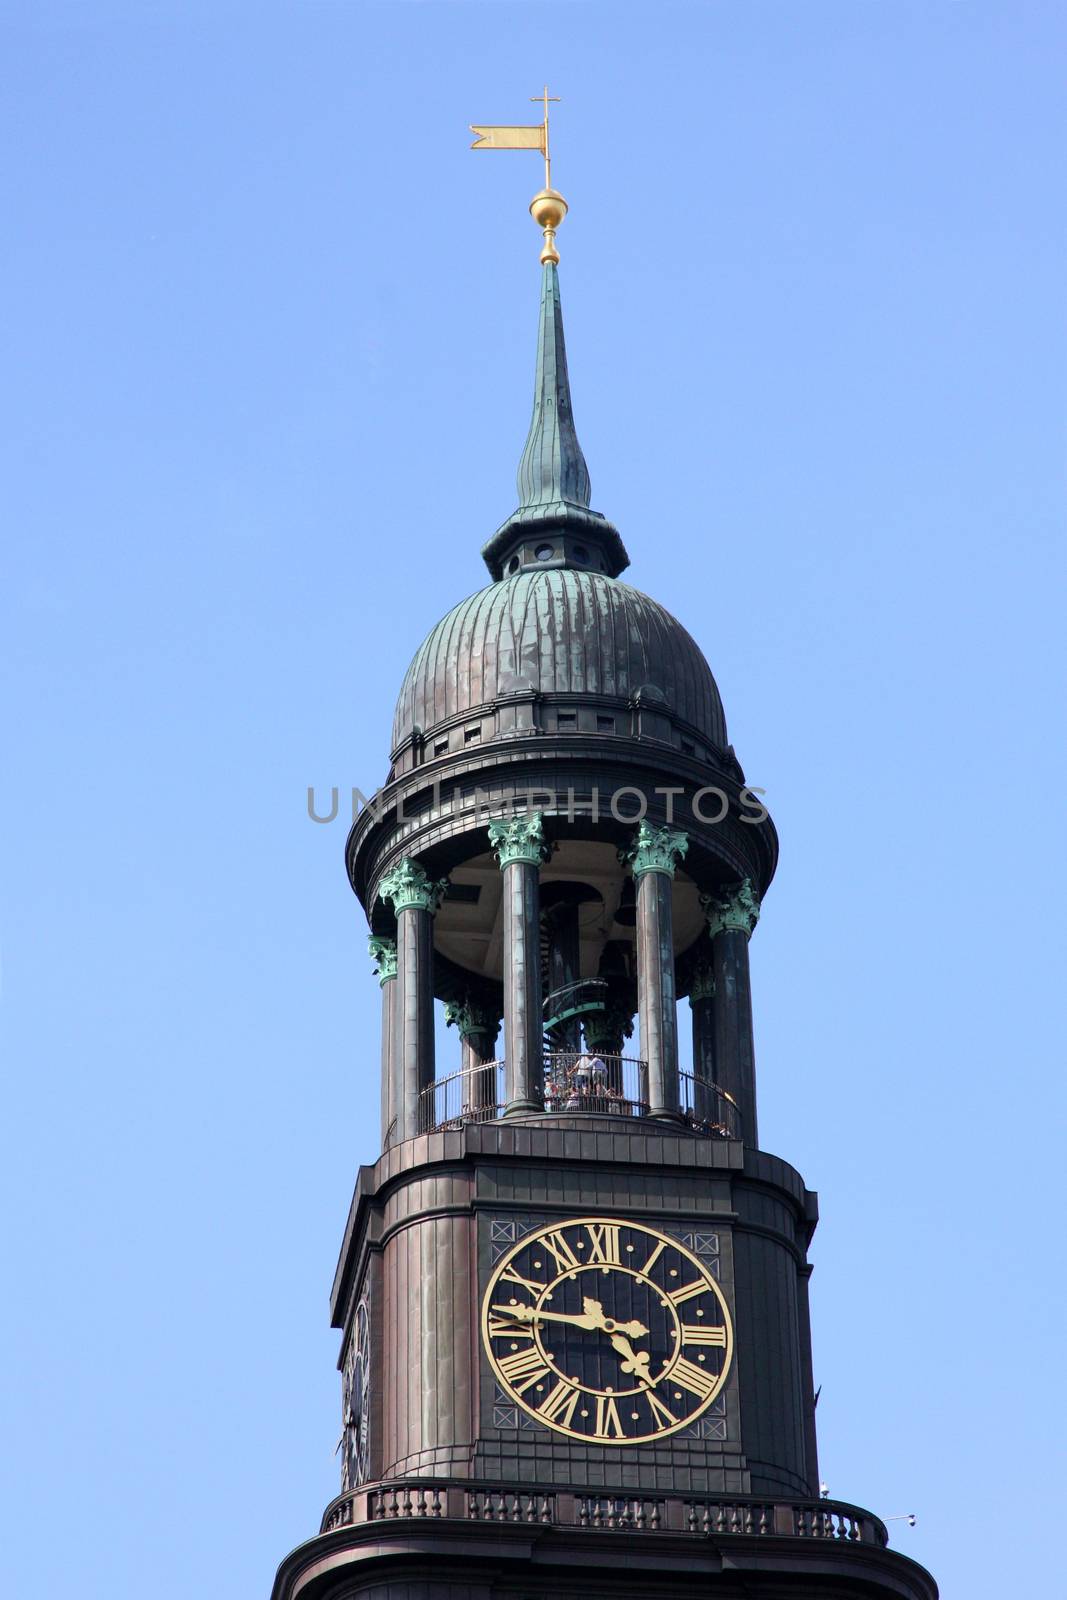  St. Michael's Church (Sankt Michaelis) in Hamburg, Germany by vladacanon